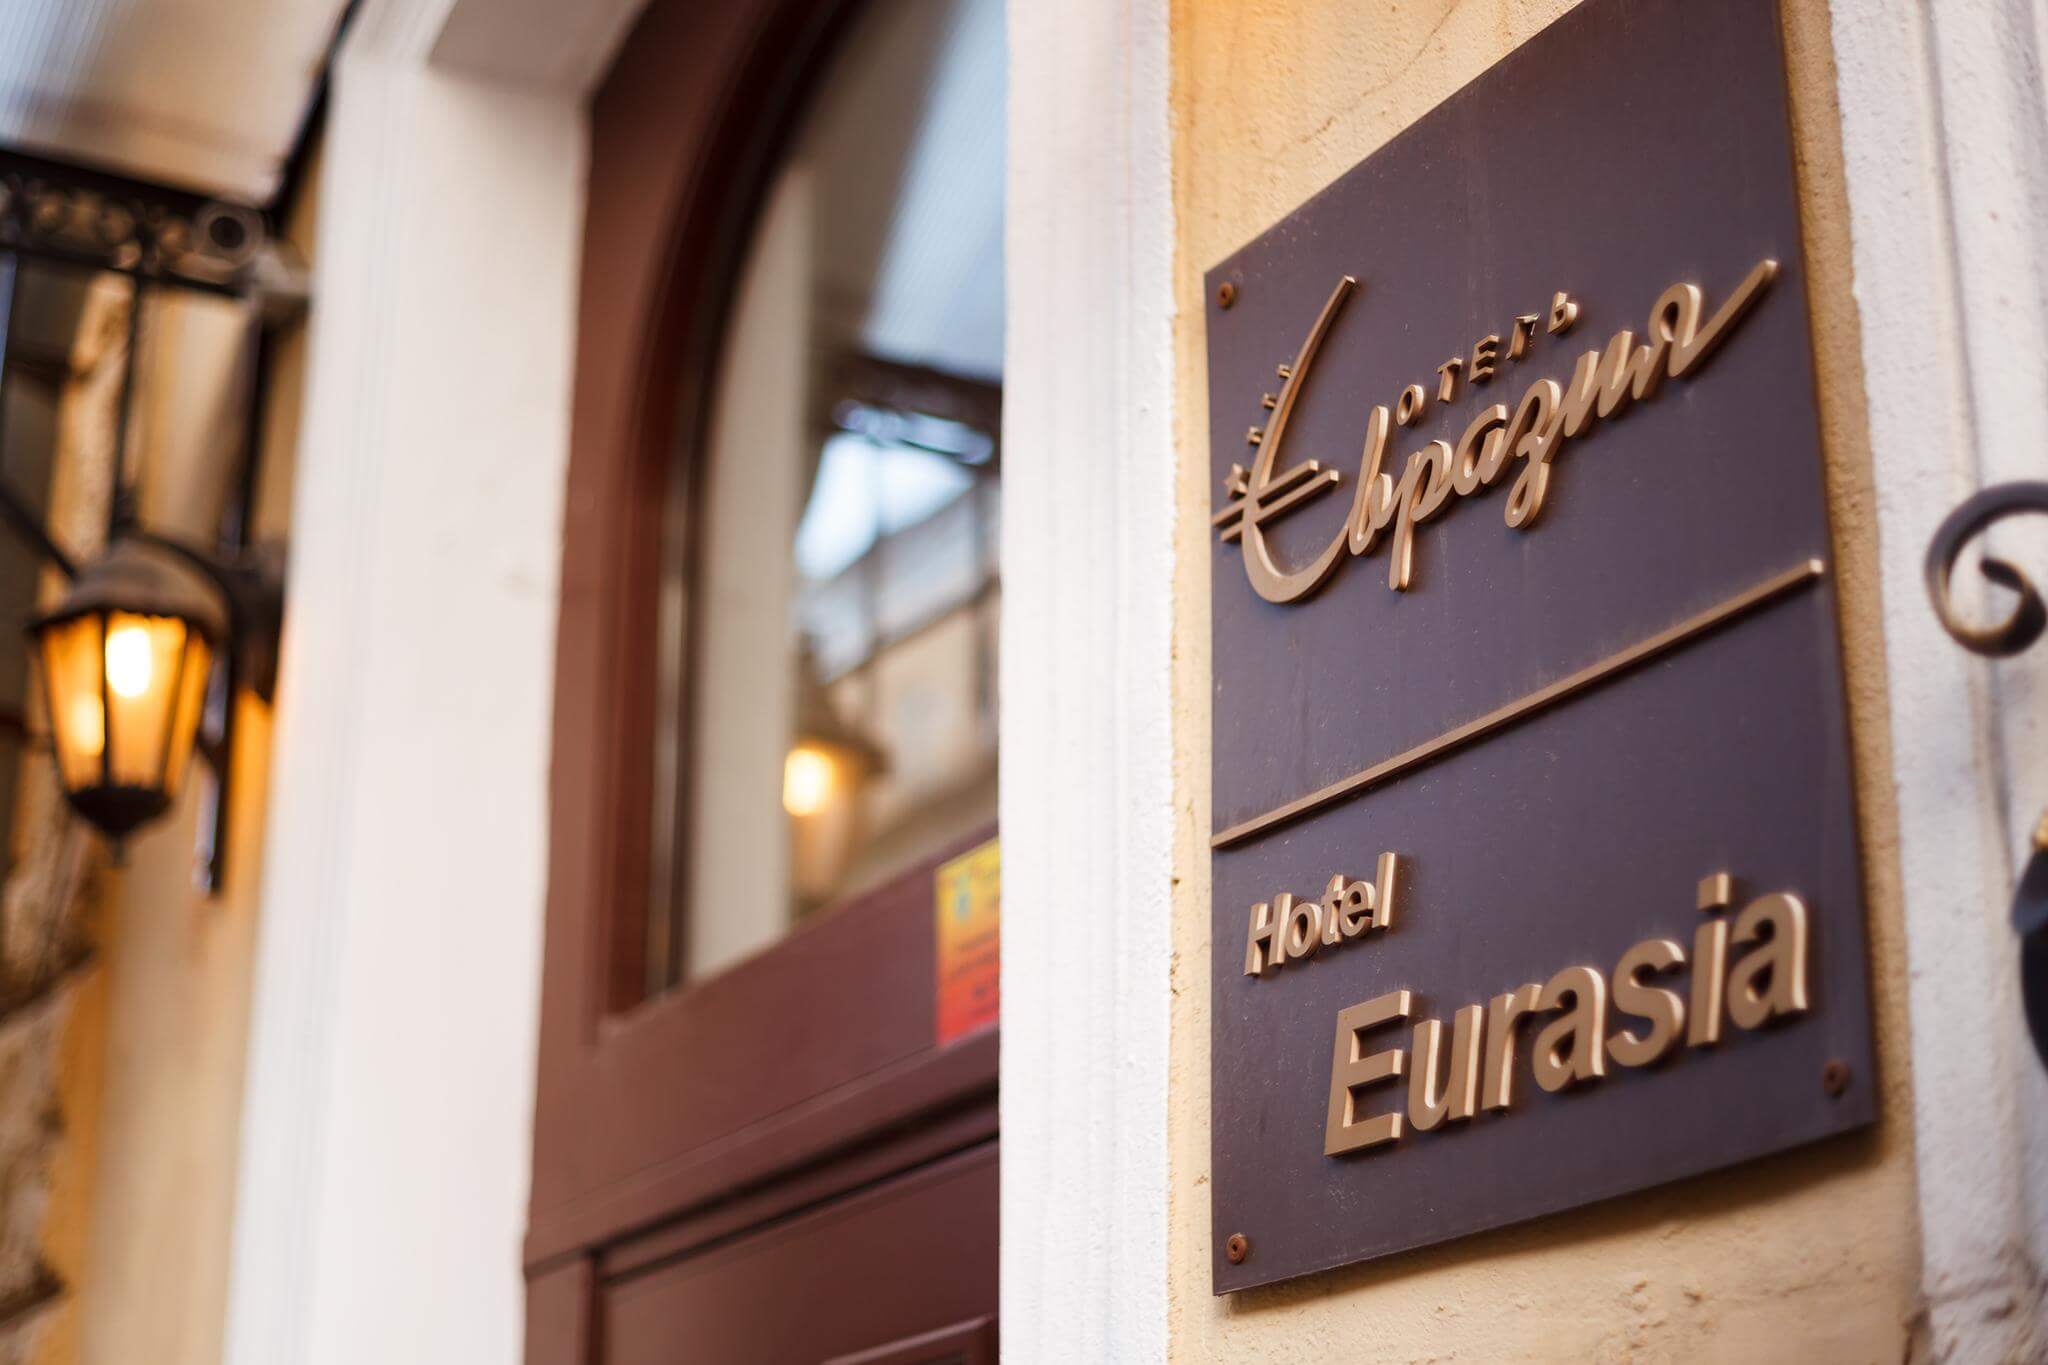 Вывеска у входа: "Hotel Eurasia".